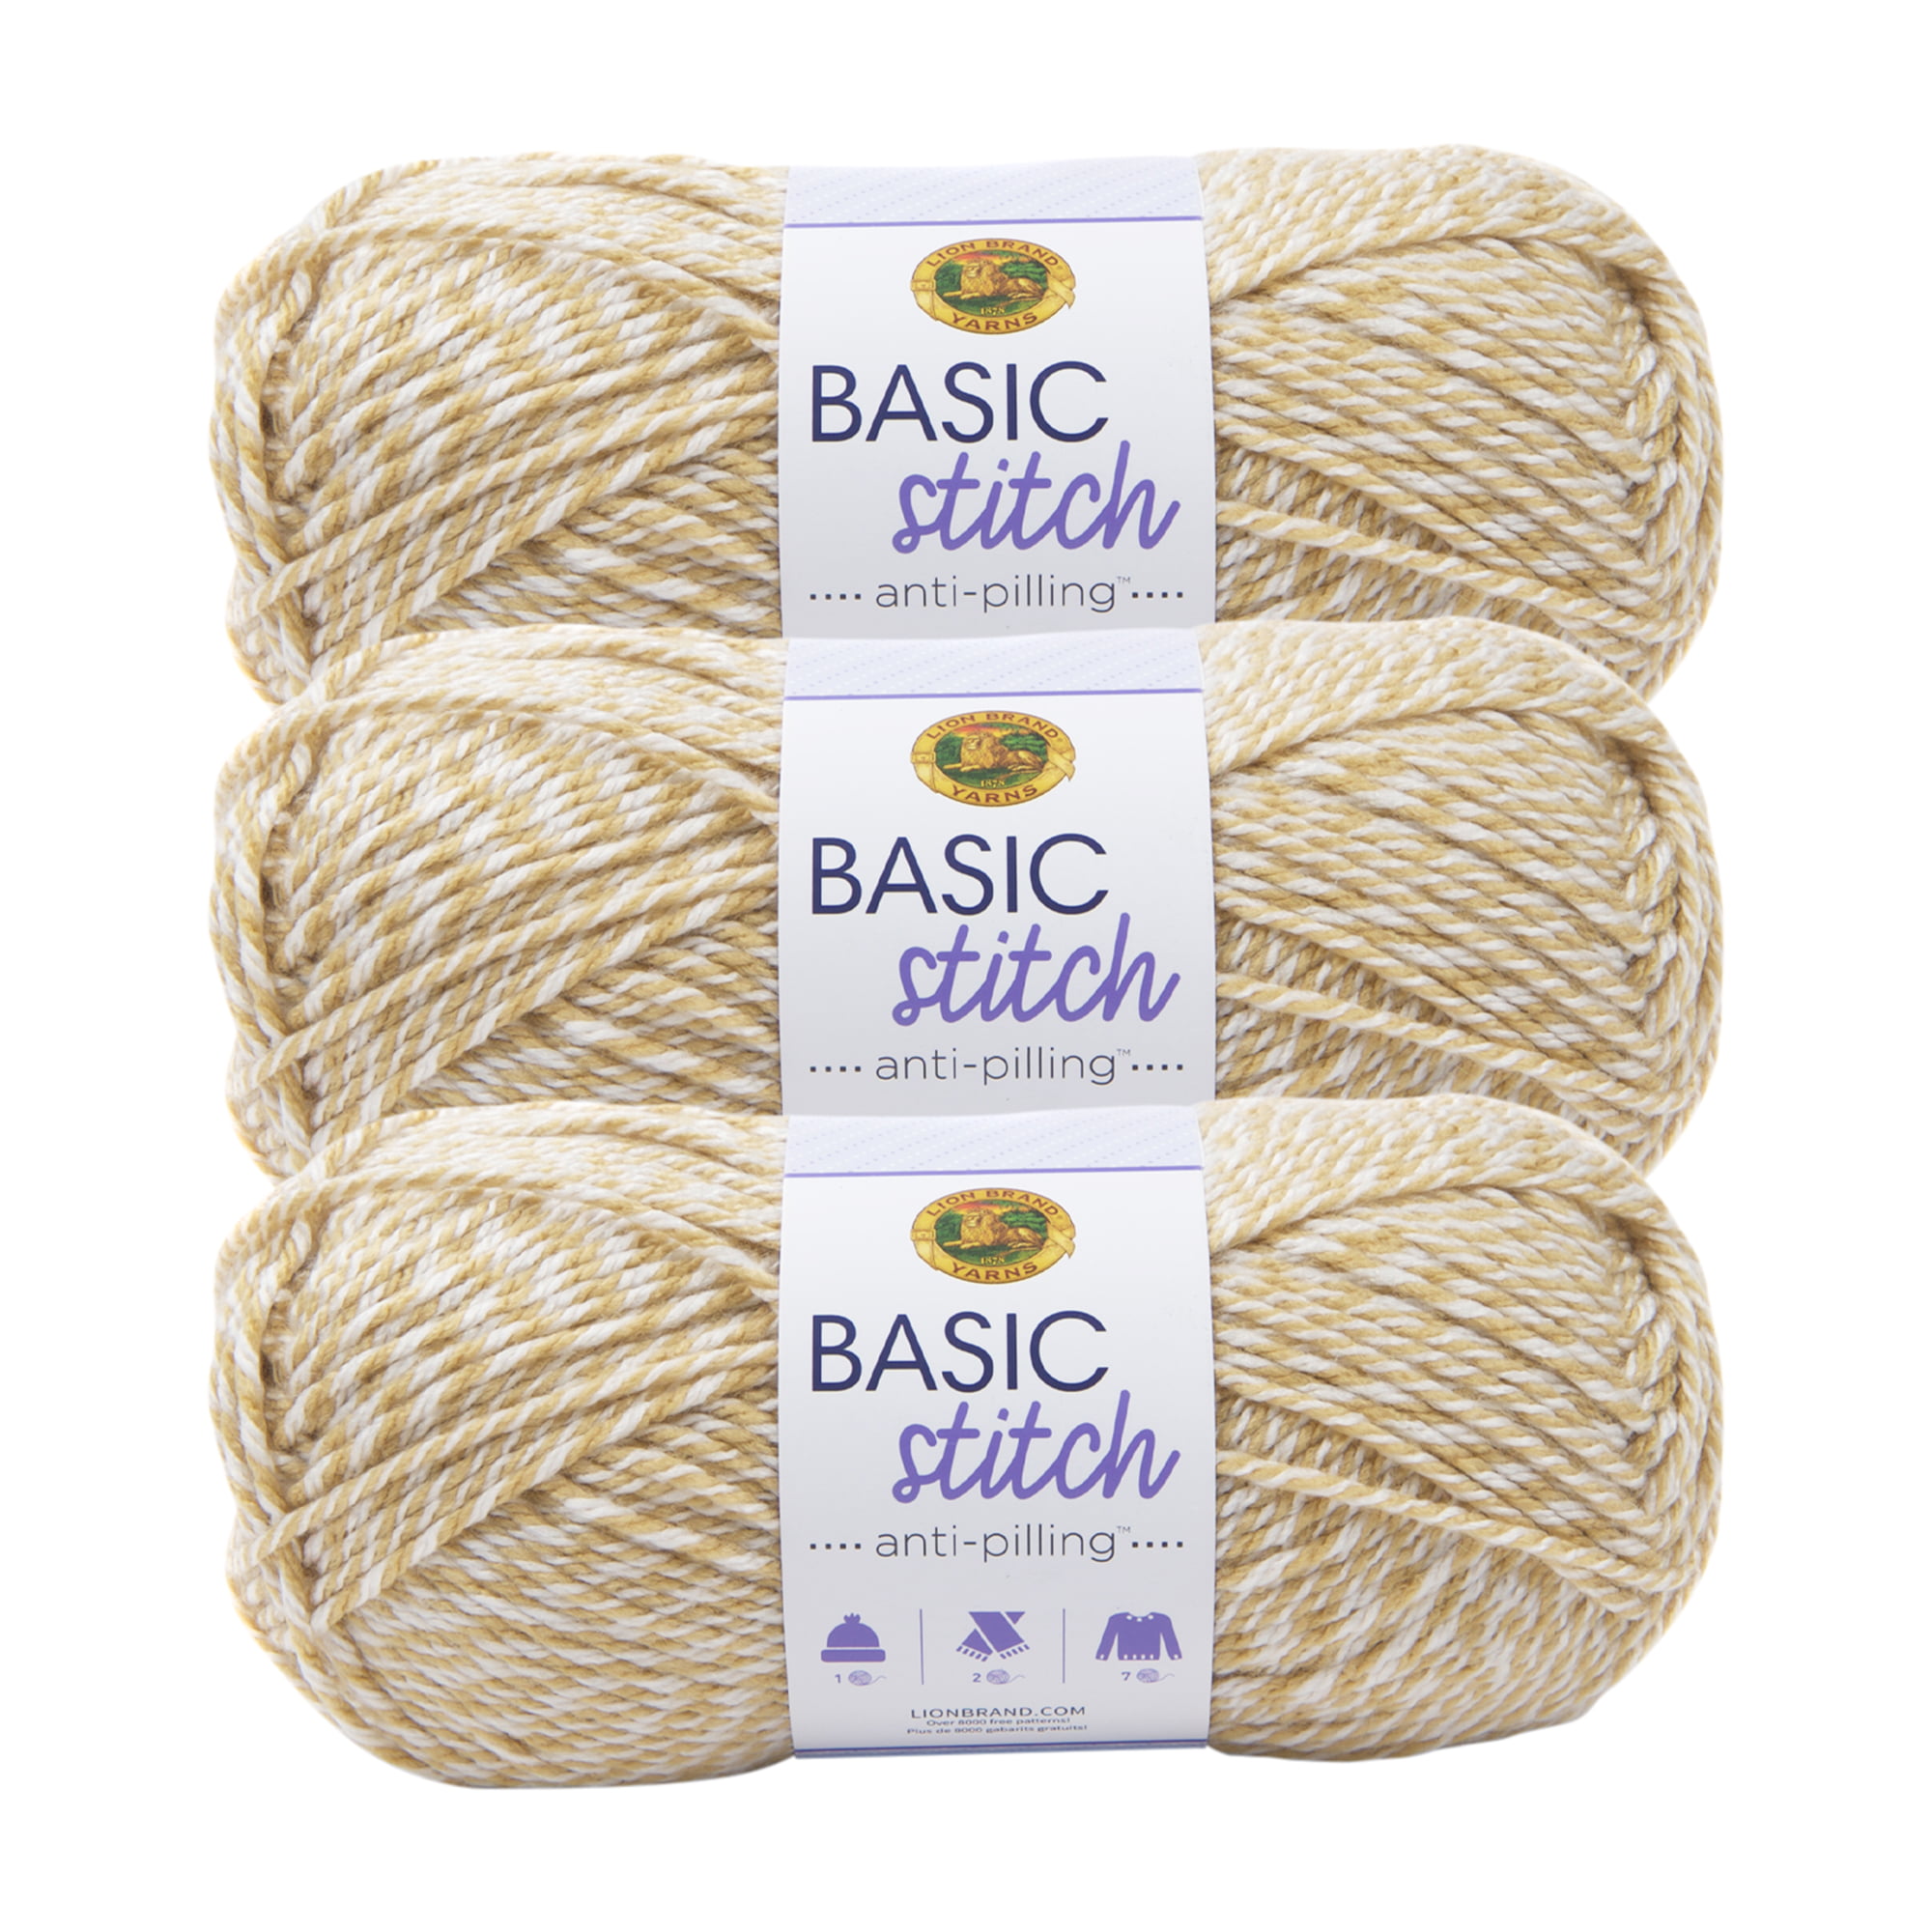 Lion Brand Yarn Basic Stitch Anti Pilling Skein Tones Ivory Anti Pilling Medium Acrylic Off-White Yarn 3 Pack, Size: 3.5 oz